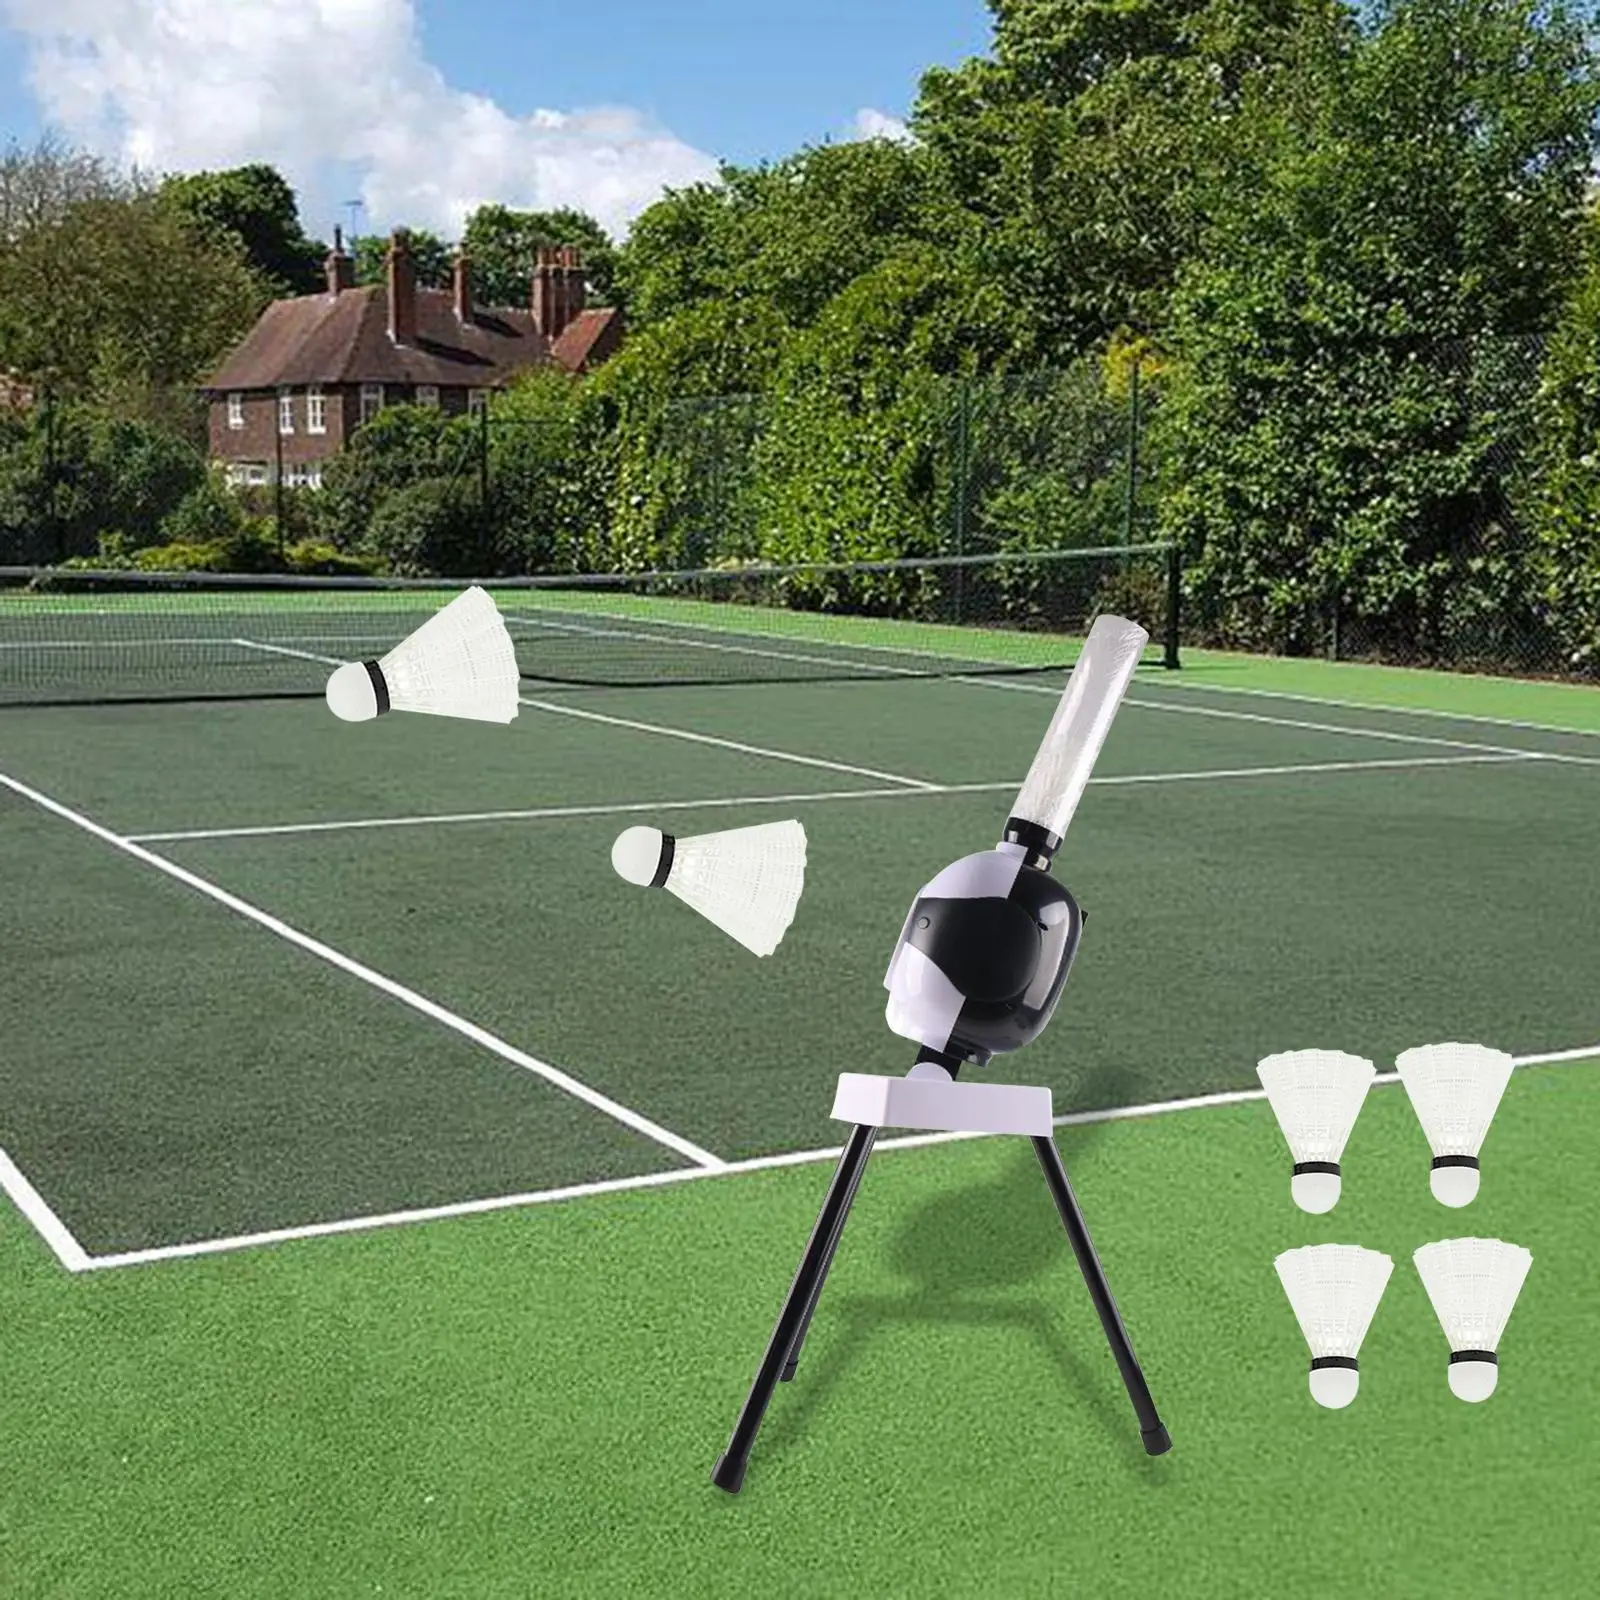 Automatic Badminton Serve Machine, Badminton Ball Practice Throwing, Portable